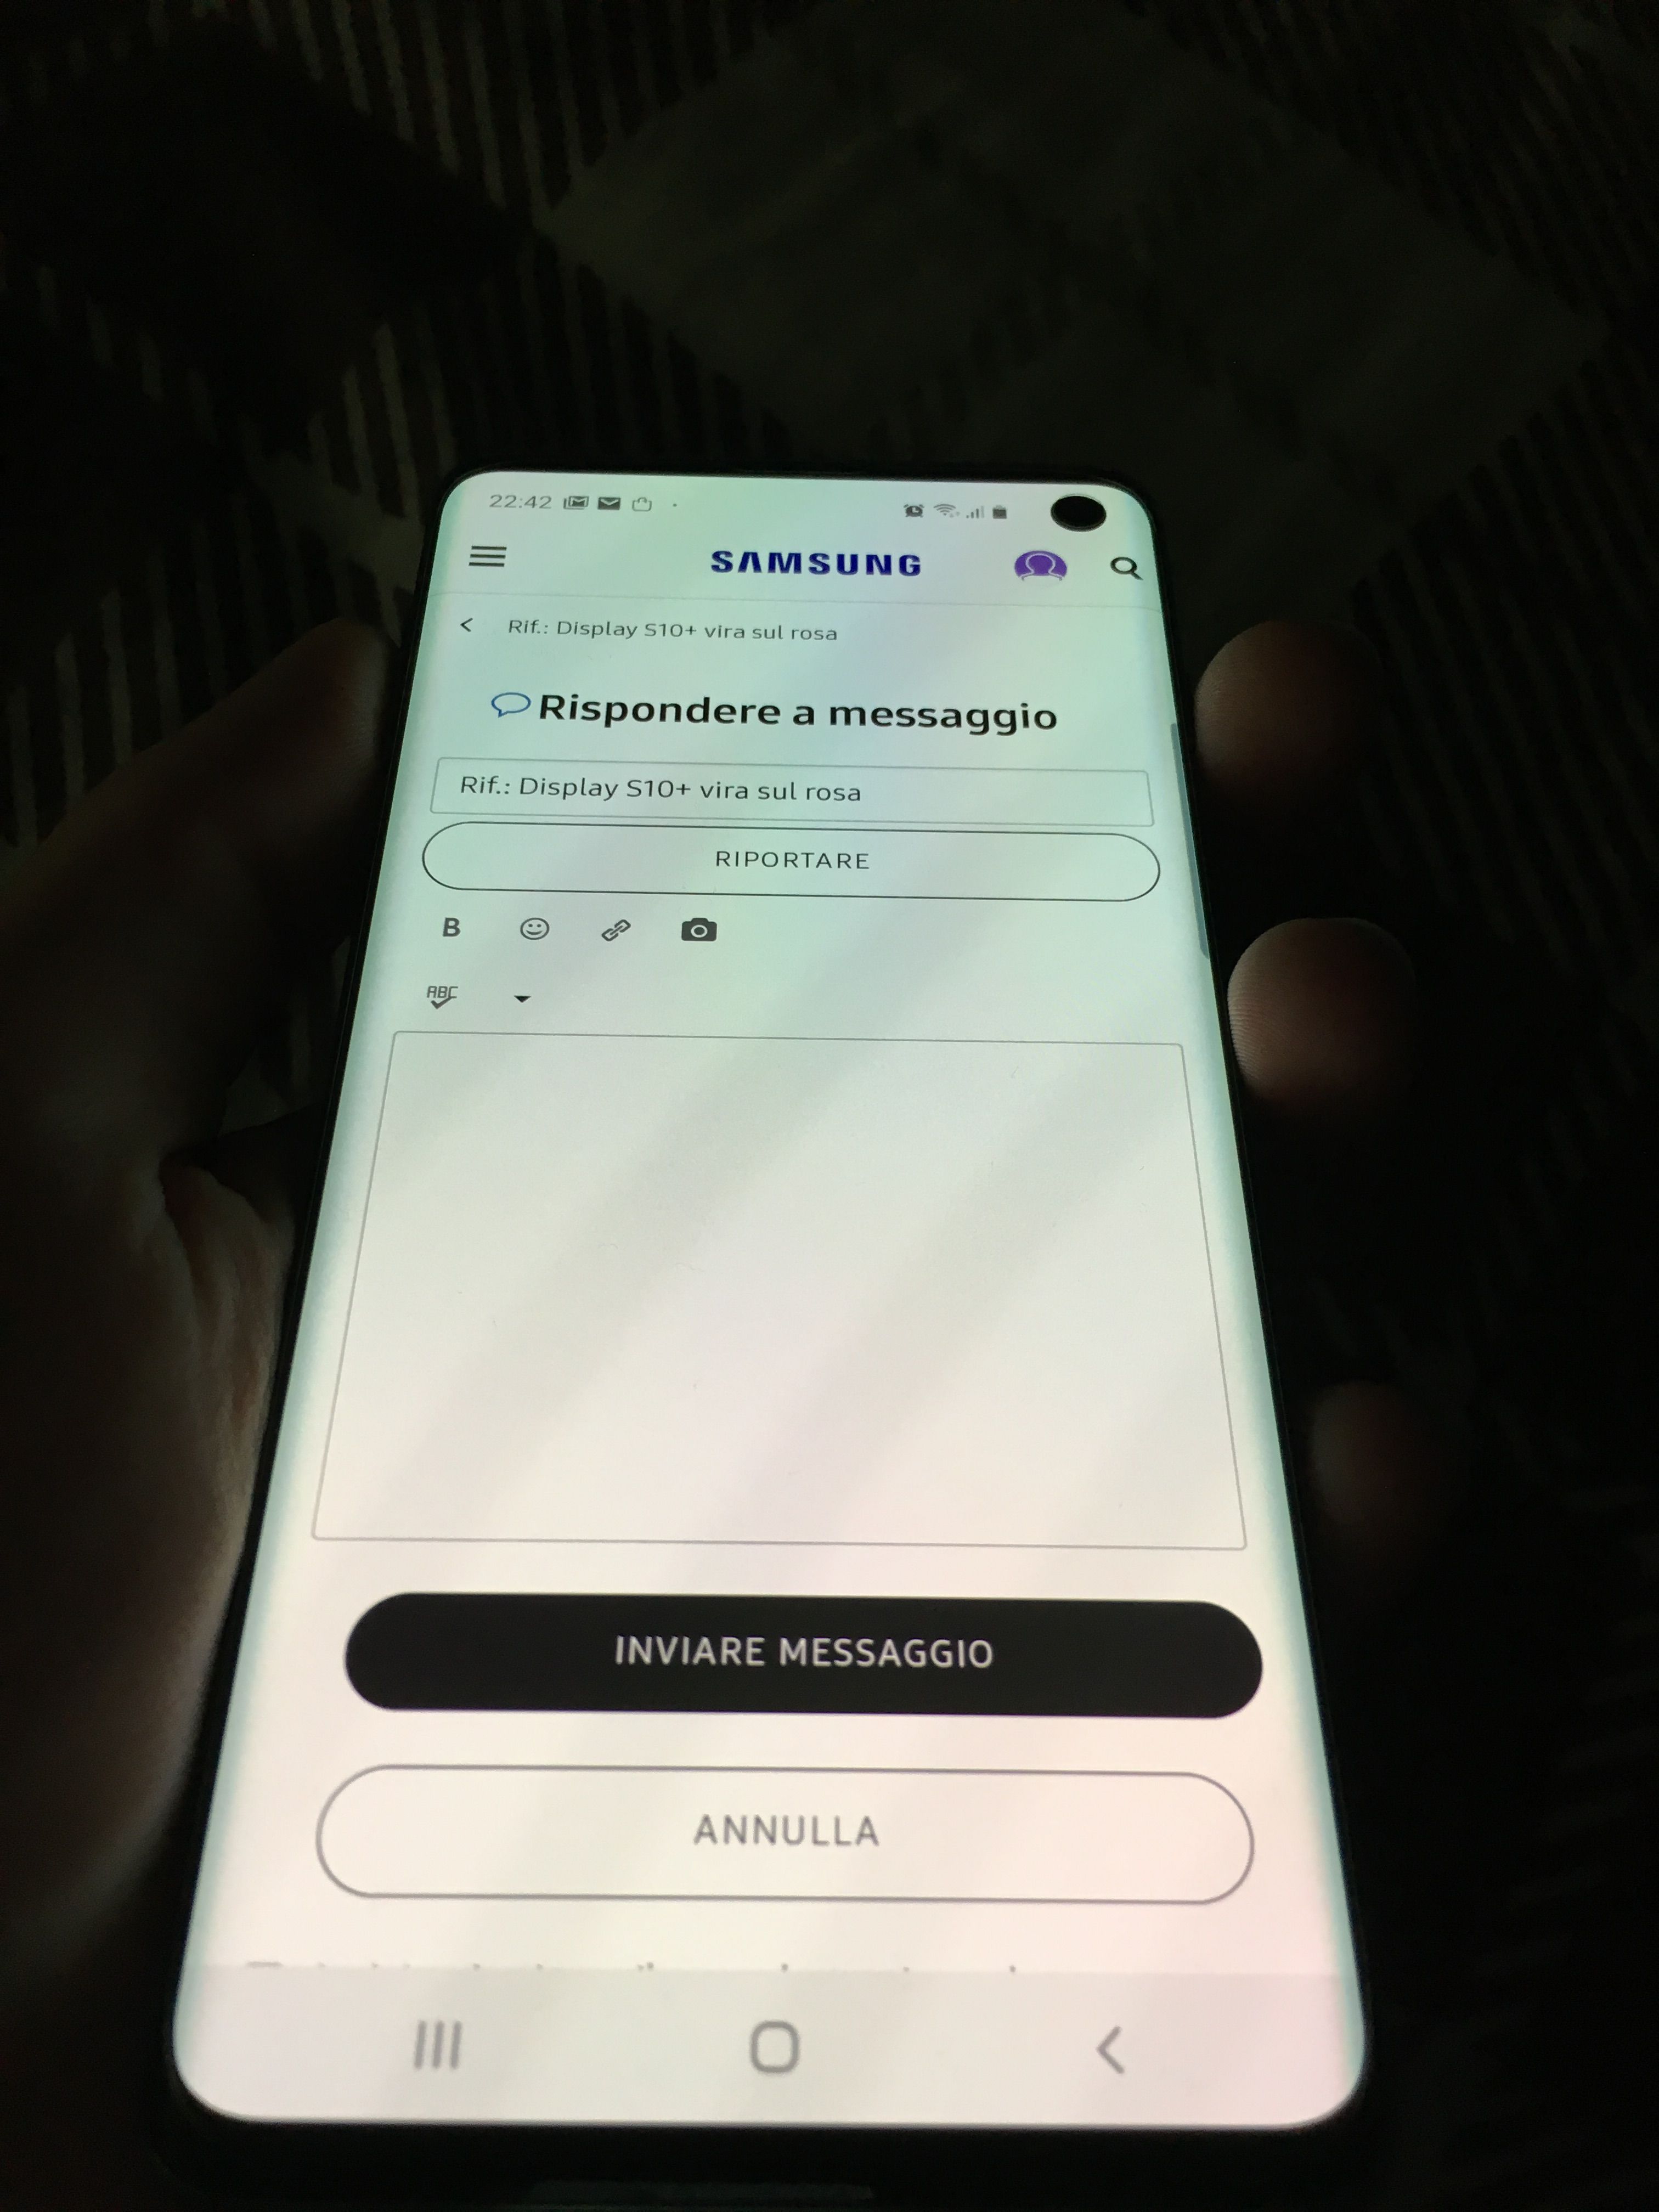 Display S10+ vira sul rosa - Samsung Community